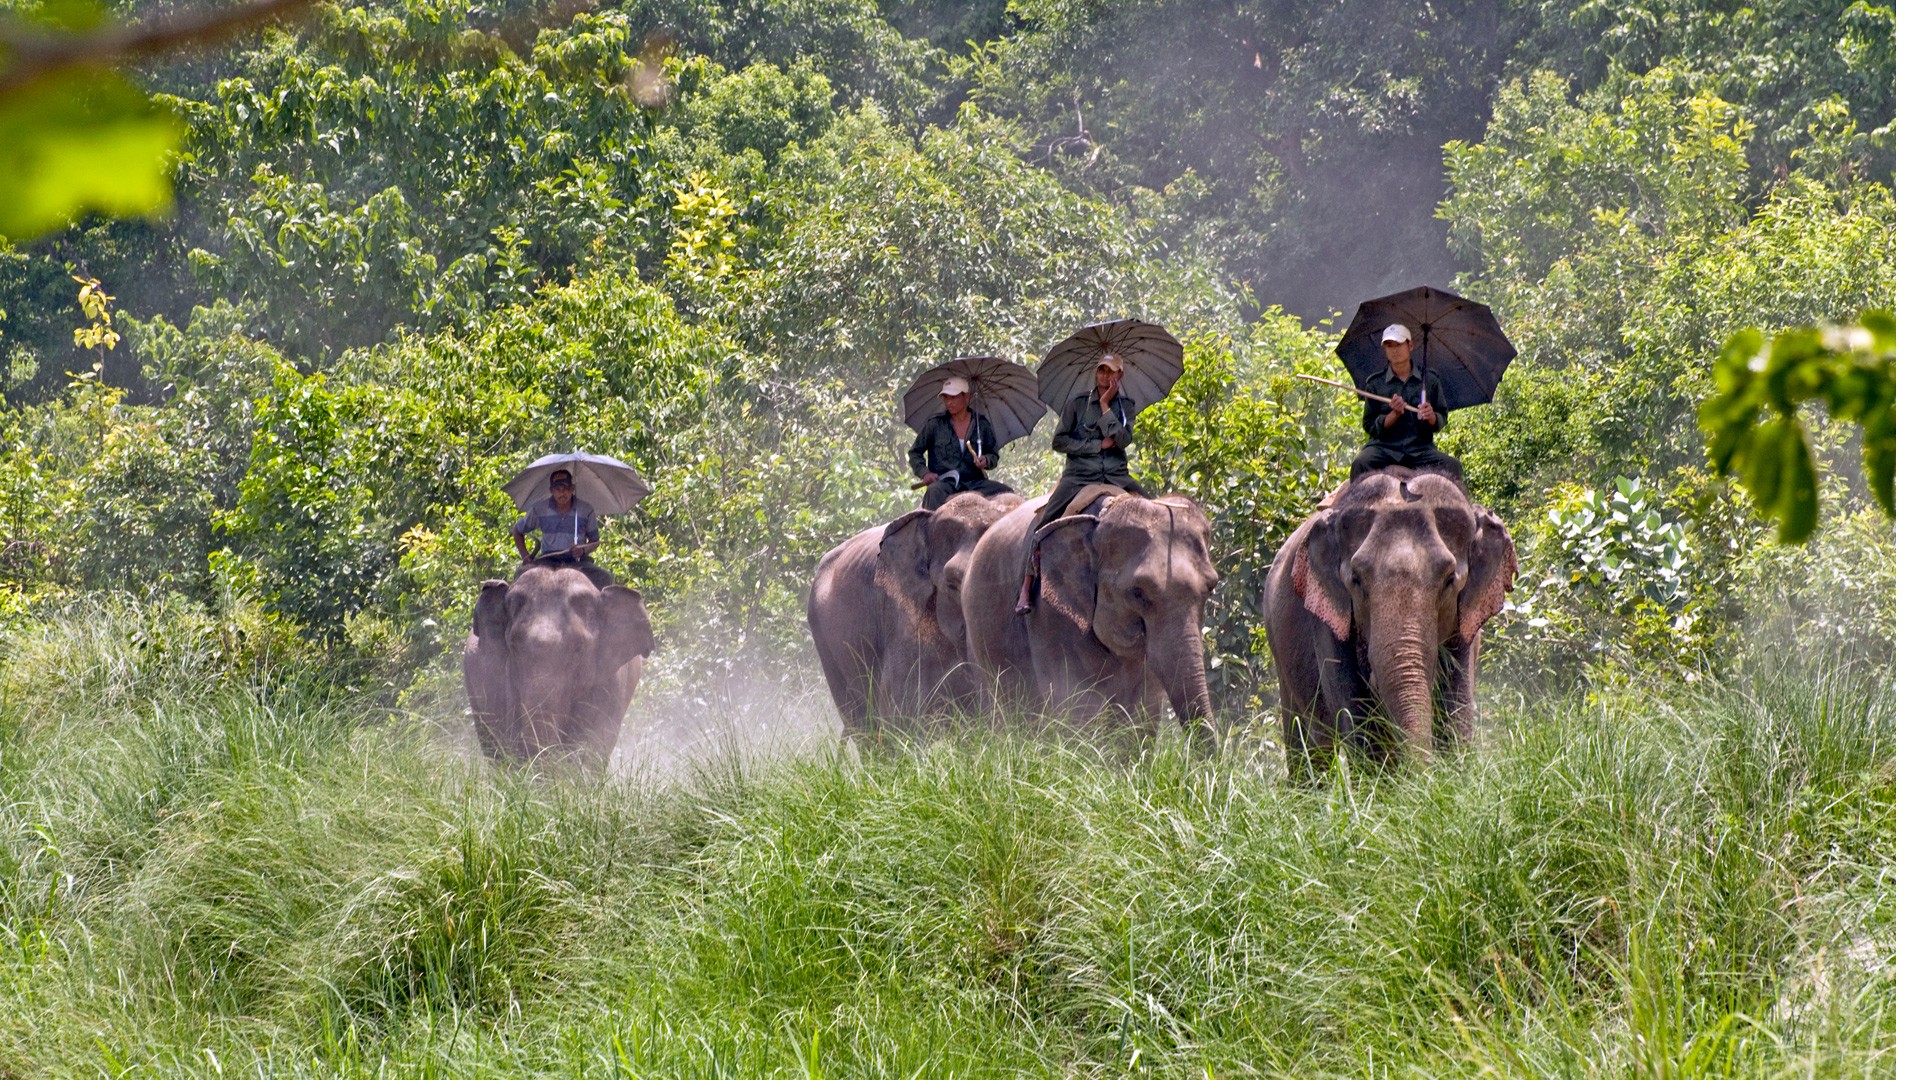 bardia jungle safari tour